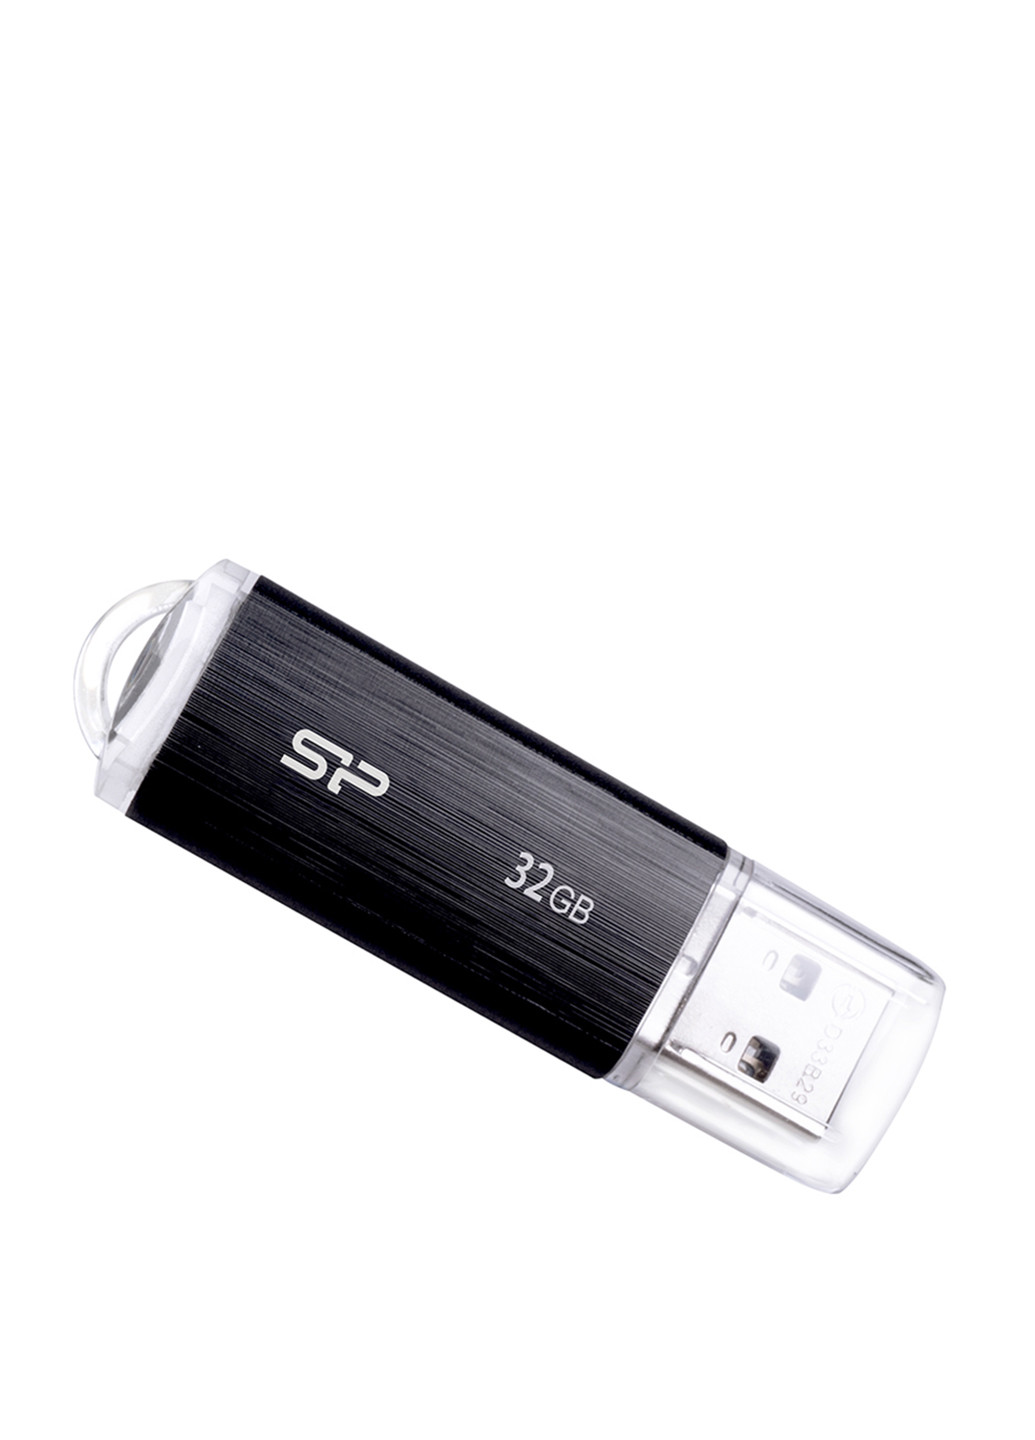 Флеш память USB Ultima U02 32GB USB 2.0 Black (SP032GBUF2U02V1K) Silicon Power флеш память usb silicon power ultima u02 32gb usb 2.0 black (sp032gbuf2u02v1k) (130221134)